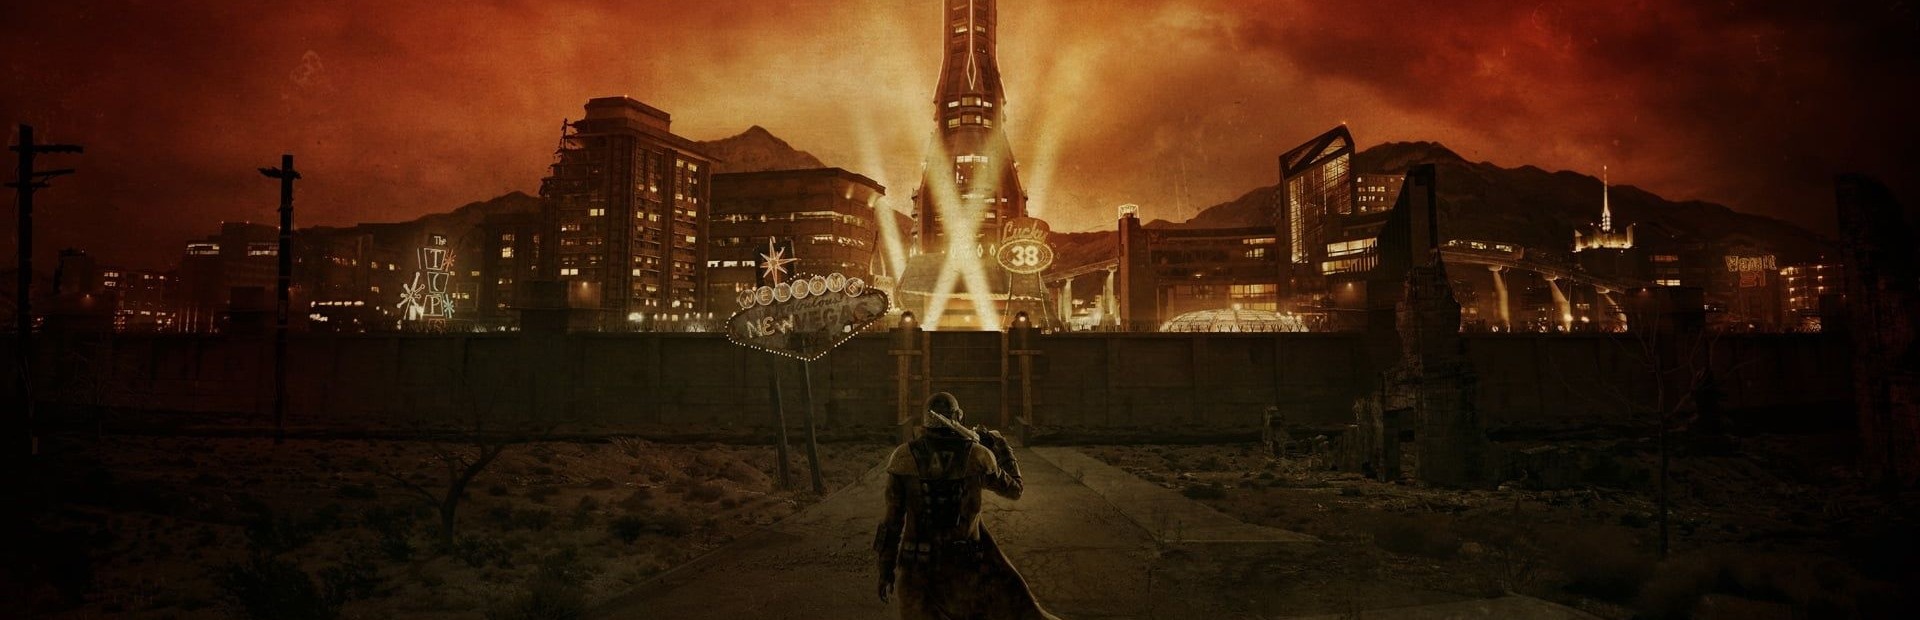 Fallout: New Vegas 2